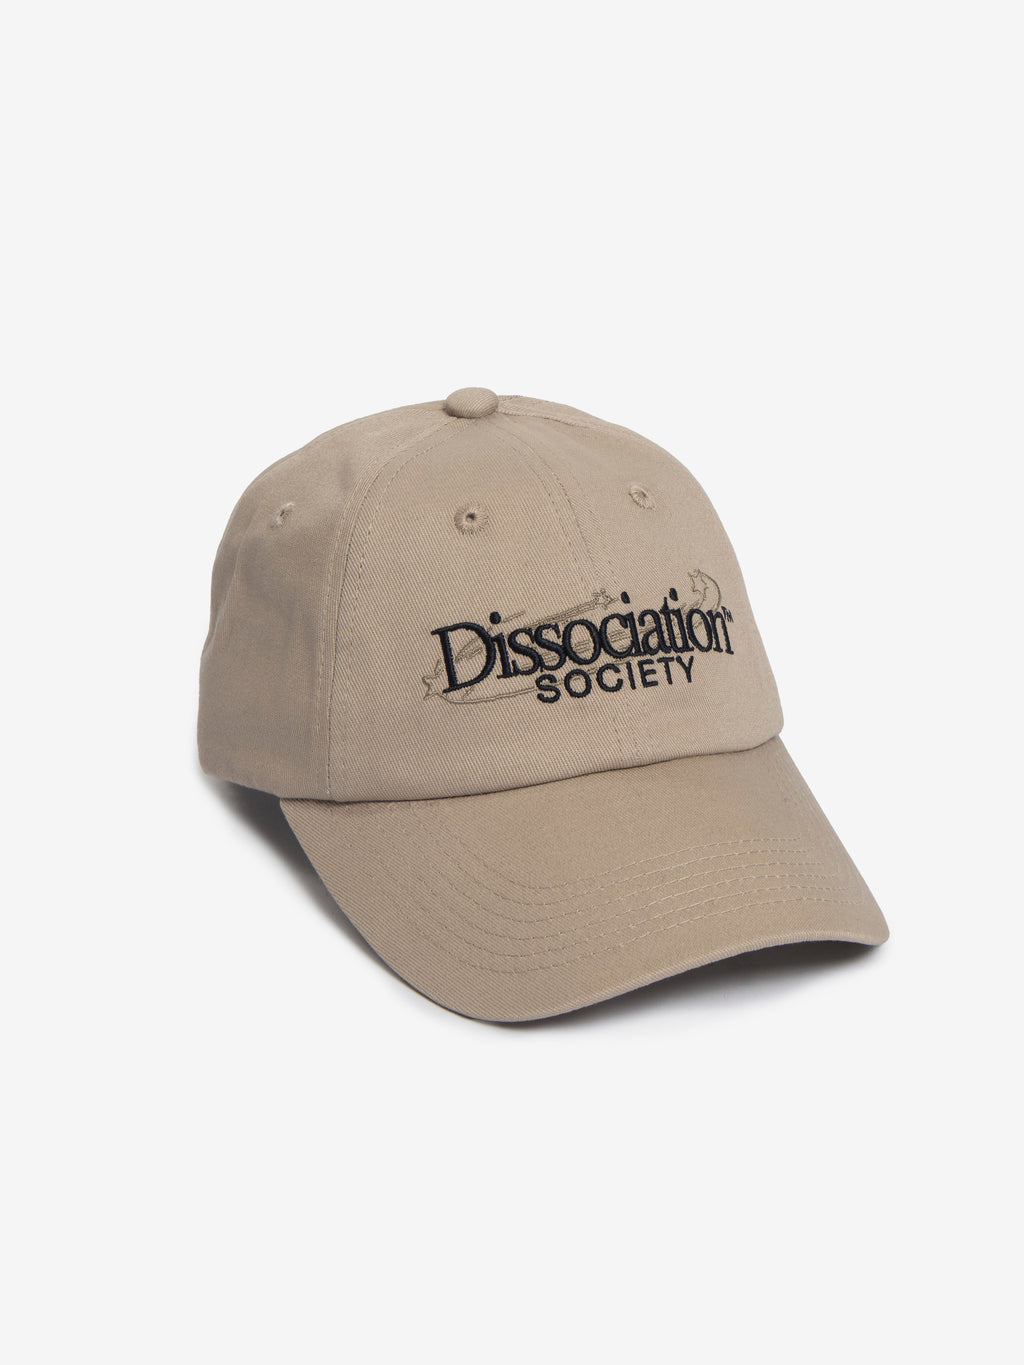 Dissociation Society Cap - Grey